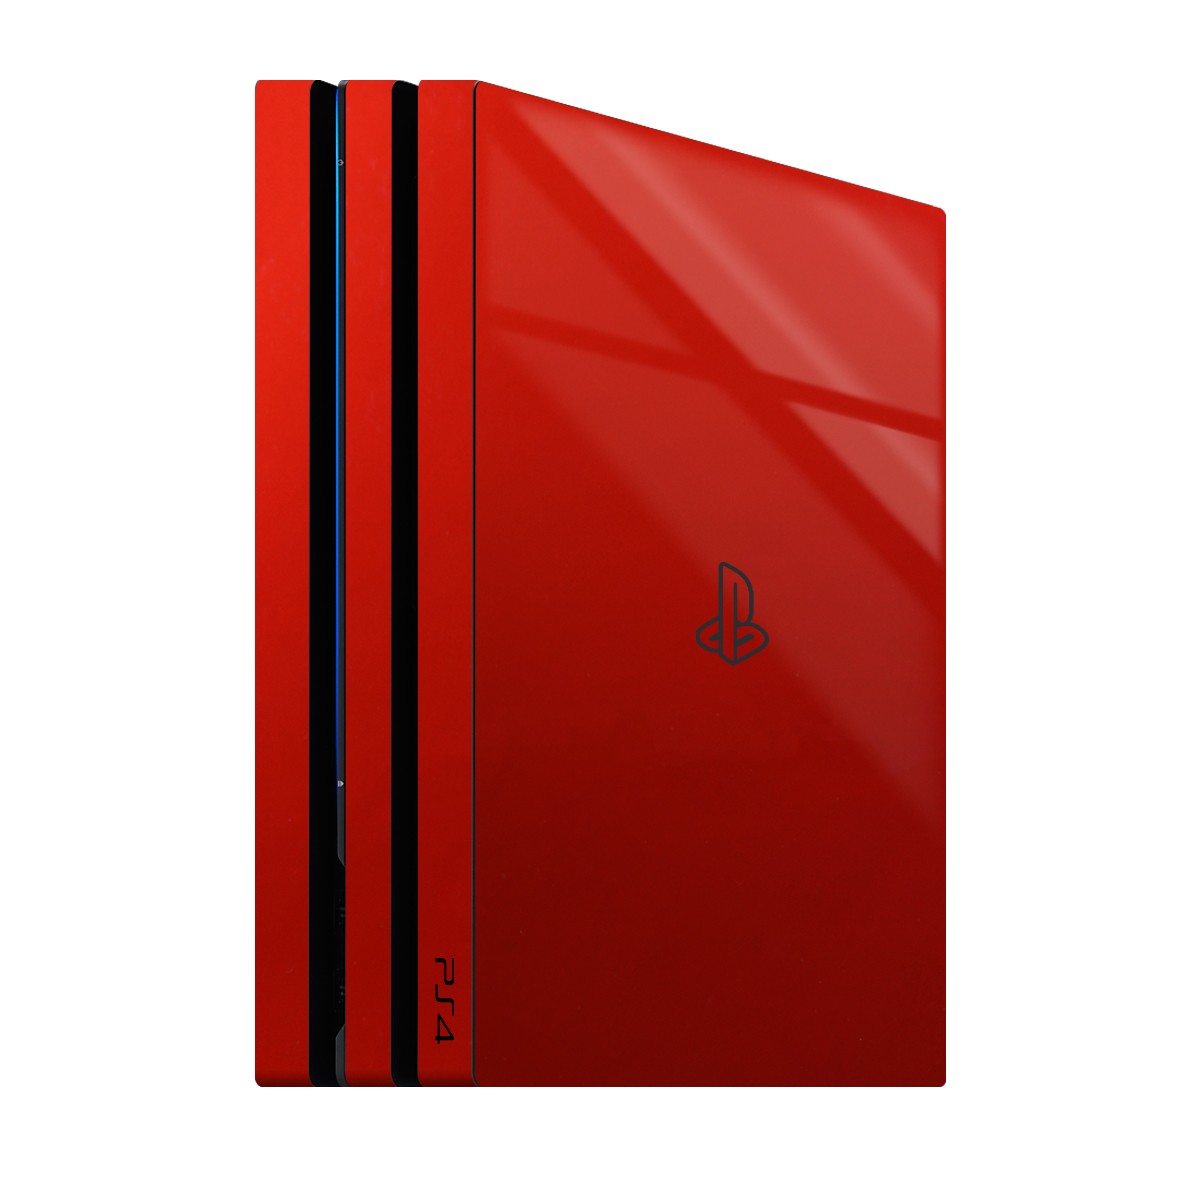 PlayStation 4 Pro Kaplama Ateş Kırmızısı